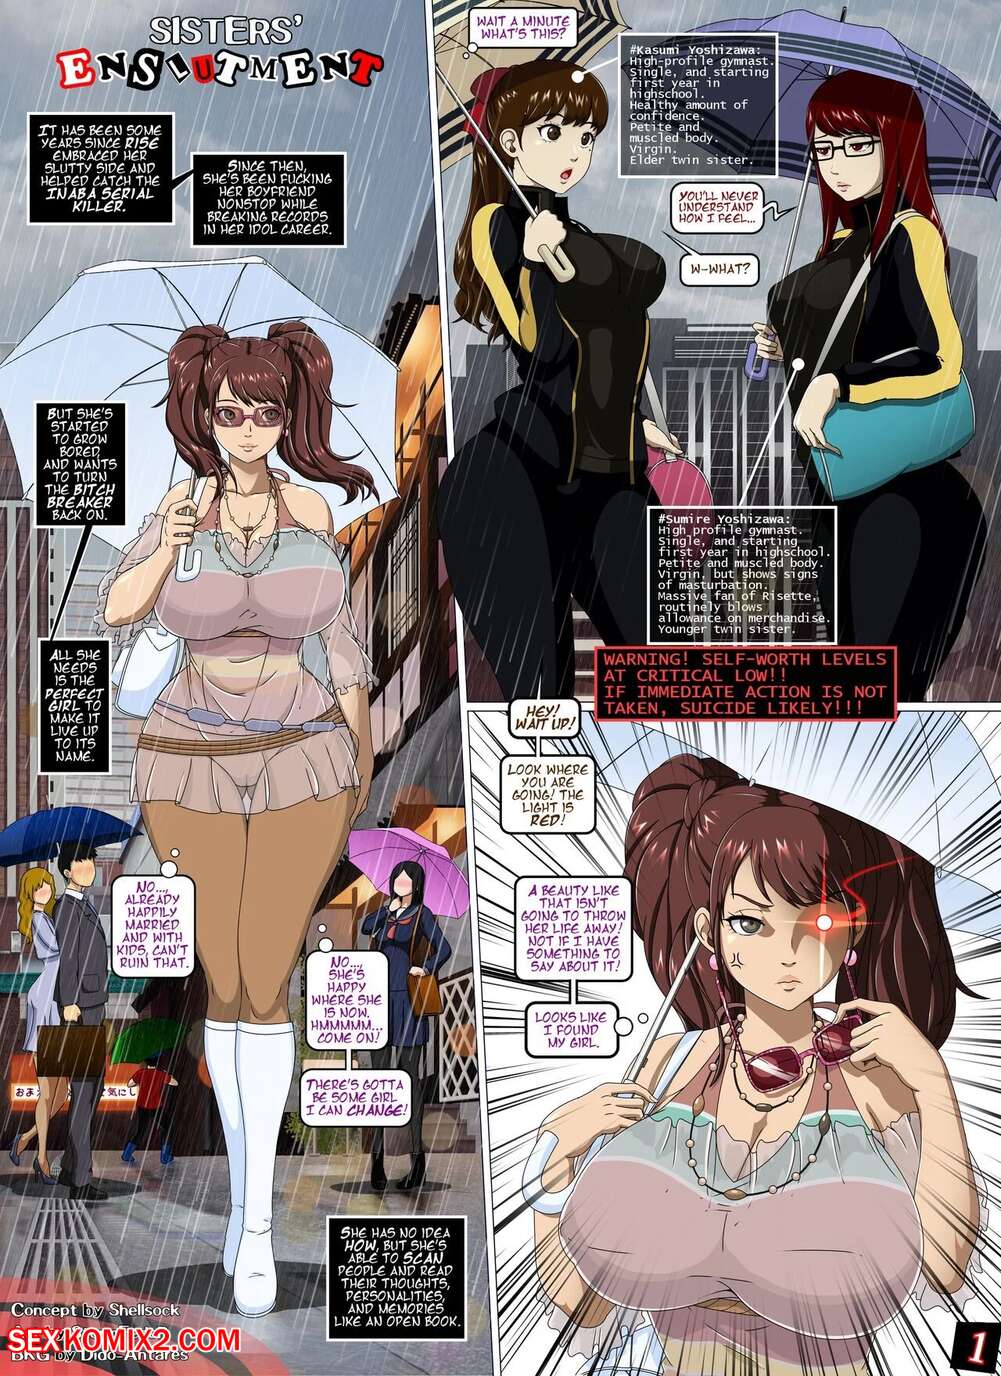 Anime shemale sibling porn comics